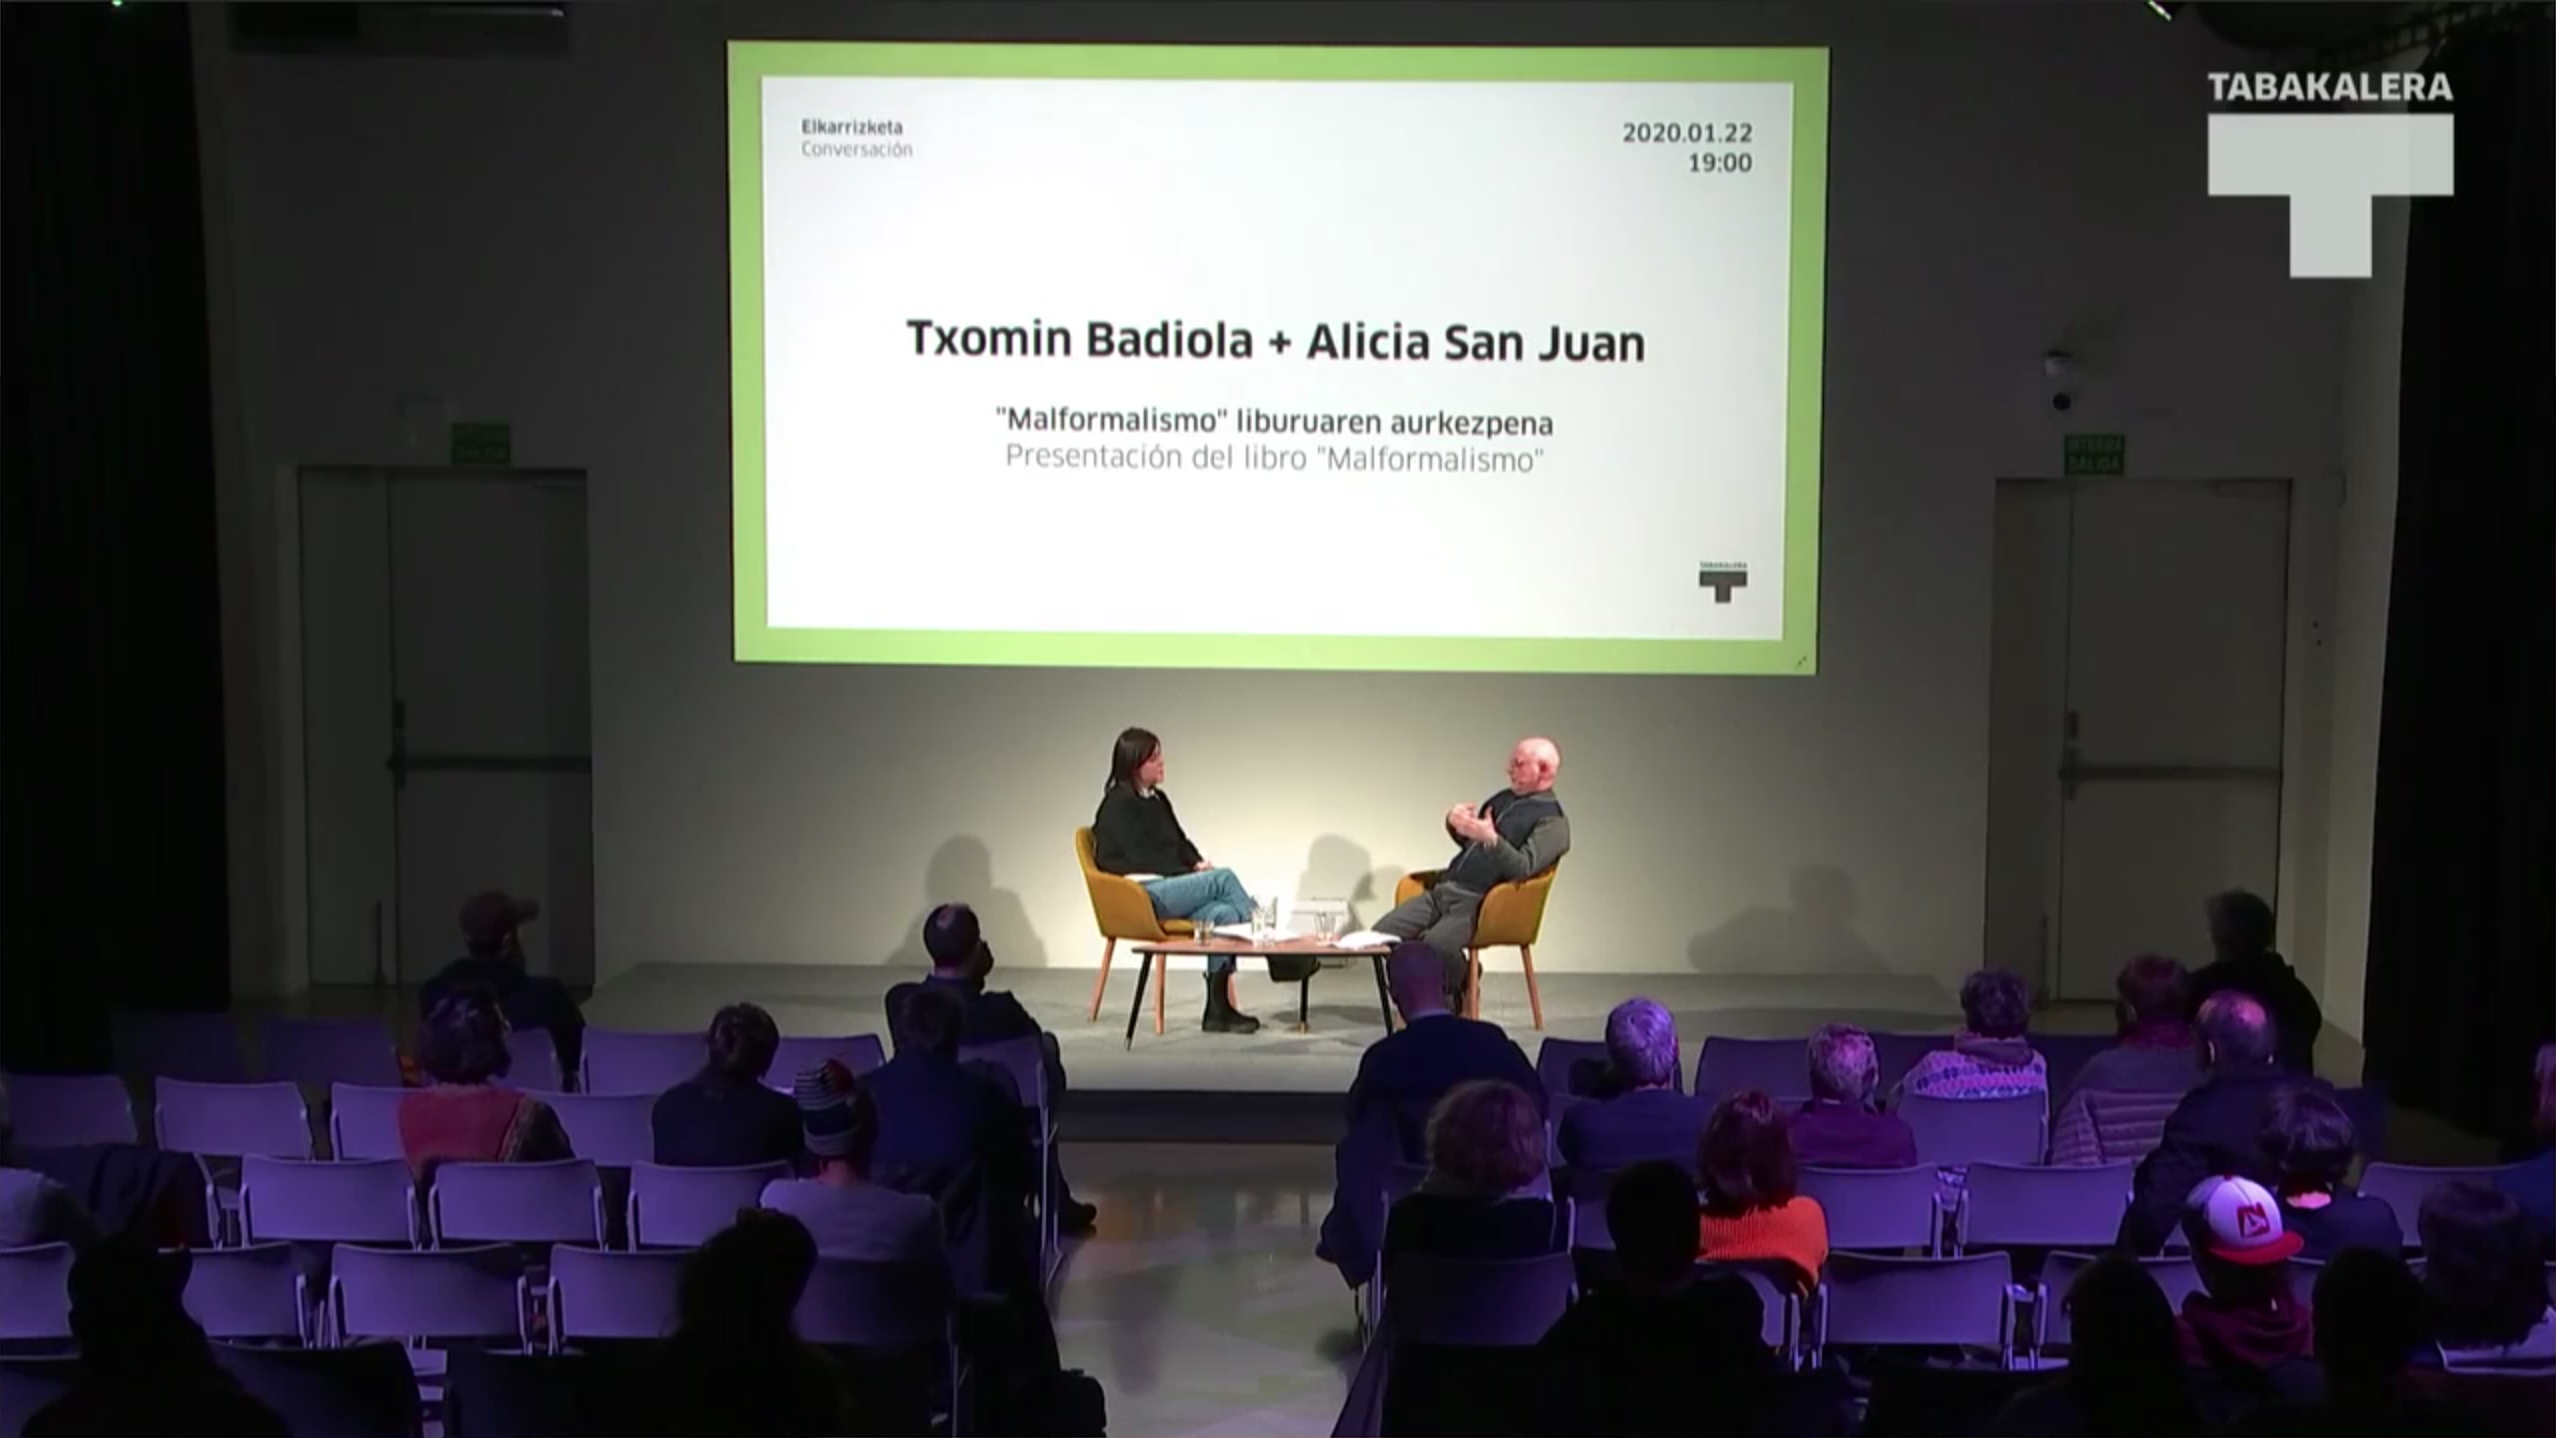 Elkarrizketa / Conversación: Txomin Badiola + Alicia San Juan